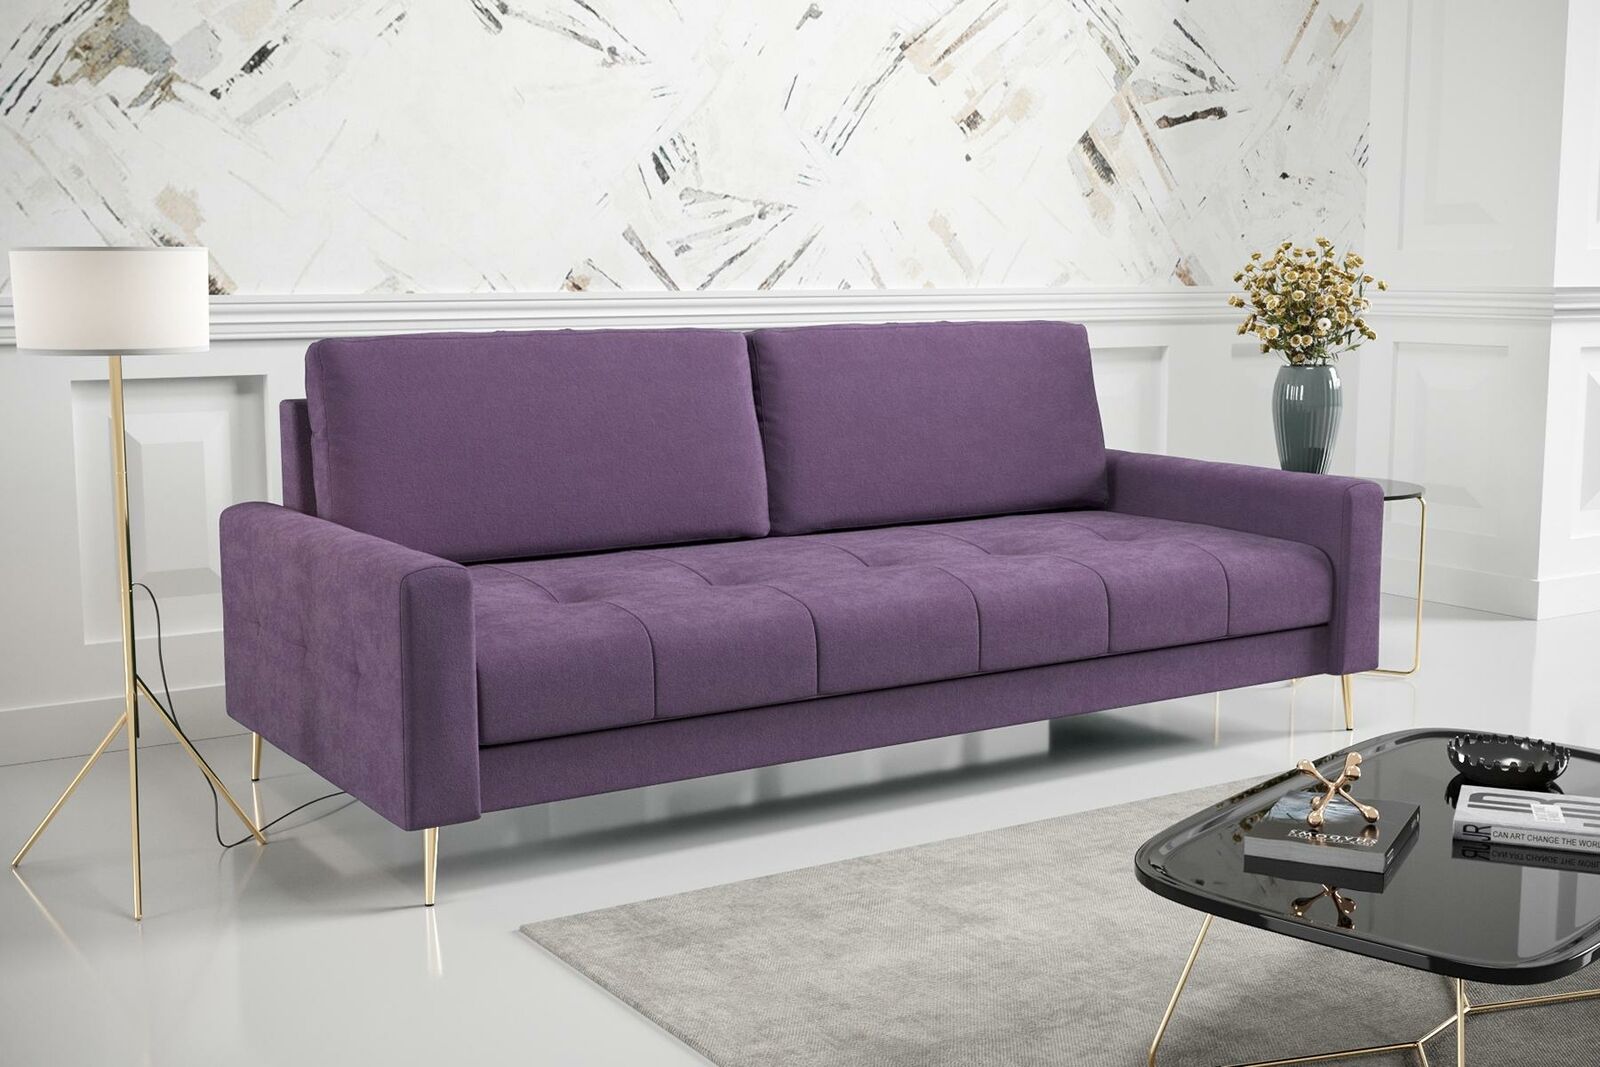 Sofa 3 Sitzer Couch Textil Sofa Edles Design Möbel Sofas Couchen xxl big neu